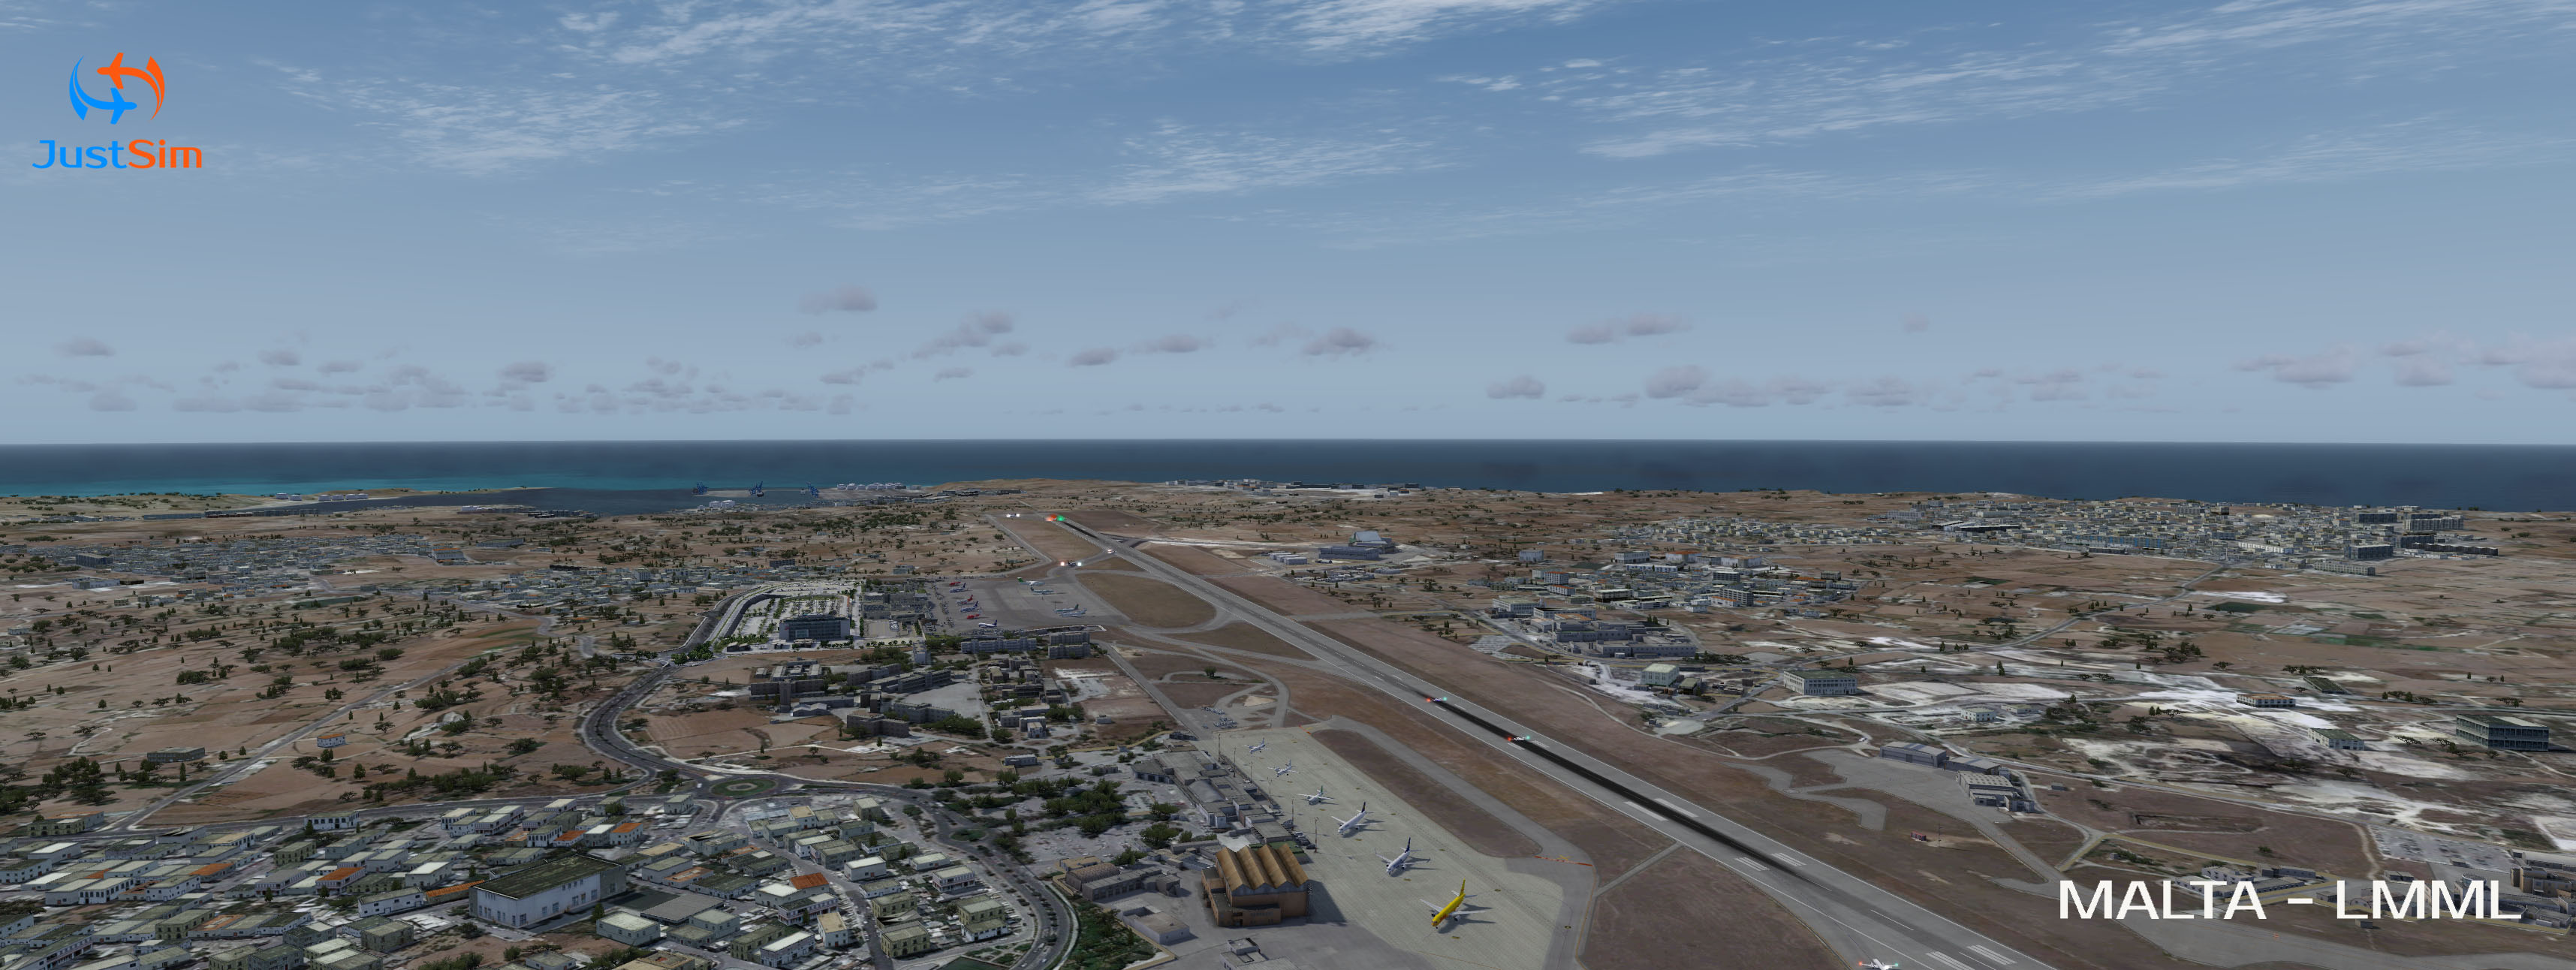 JustSim Malta Intl. Airport (LMML) Released